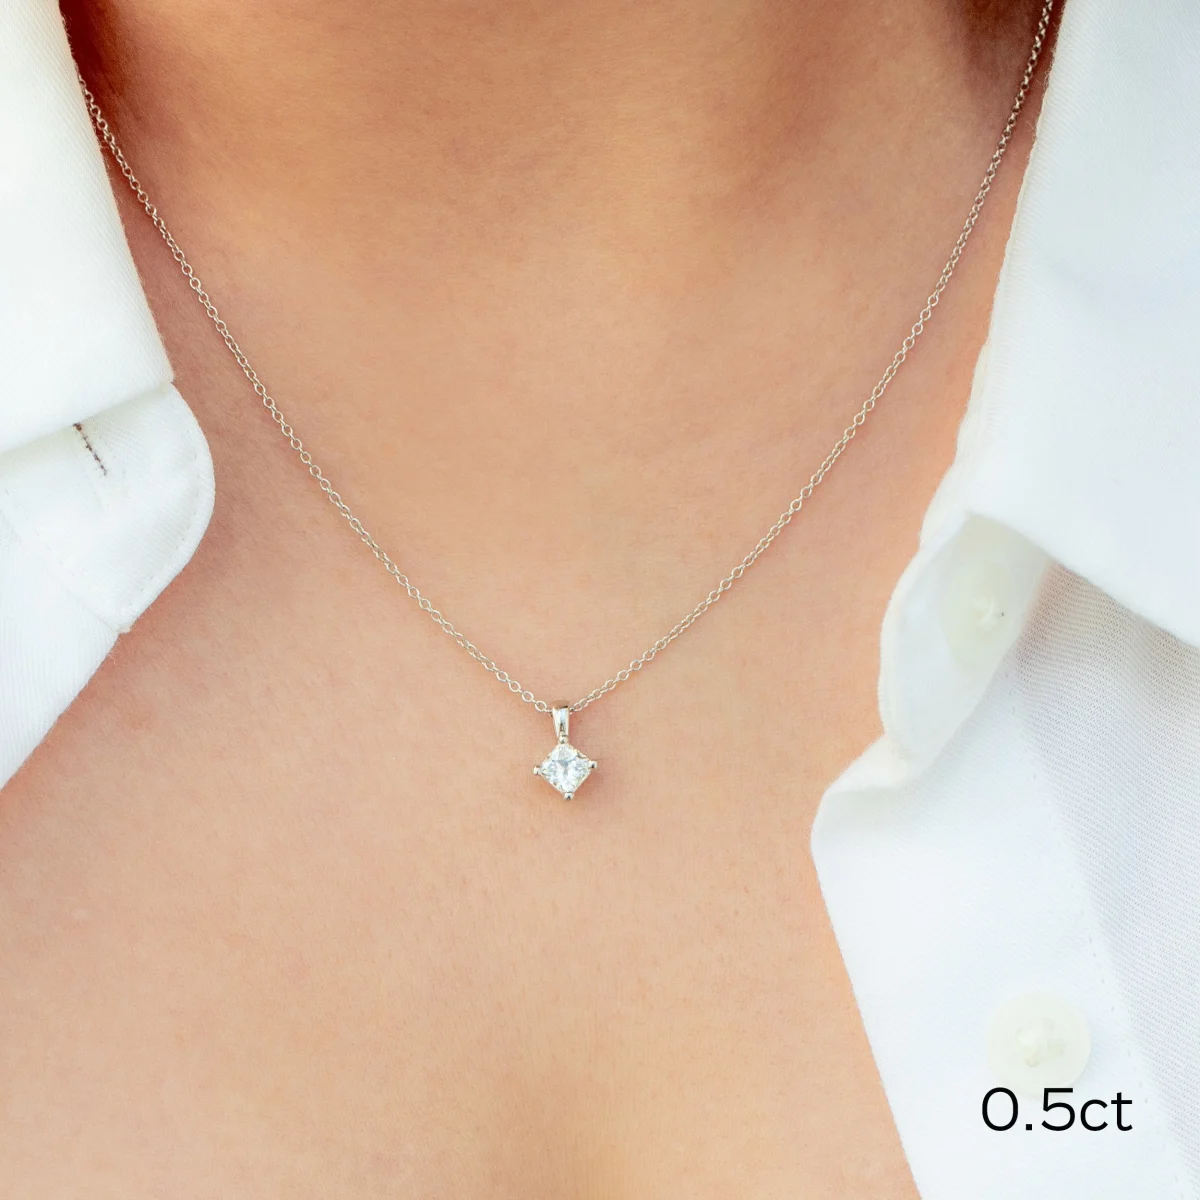 Silver Necklace with Princess cut paraiba tourmaline pendant